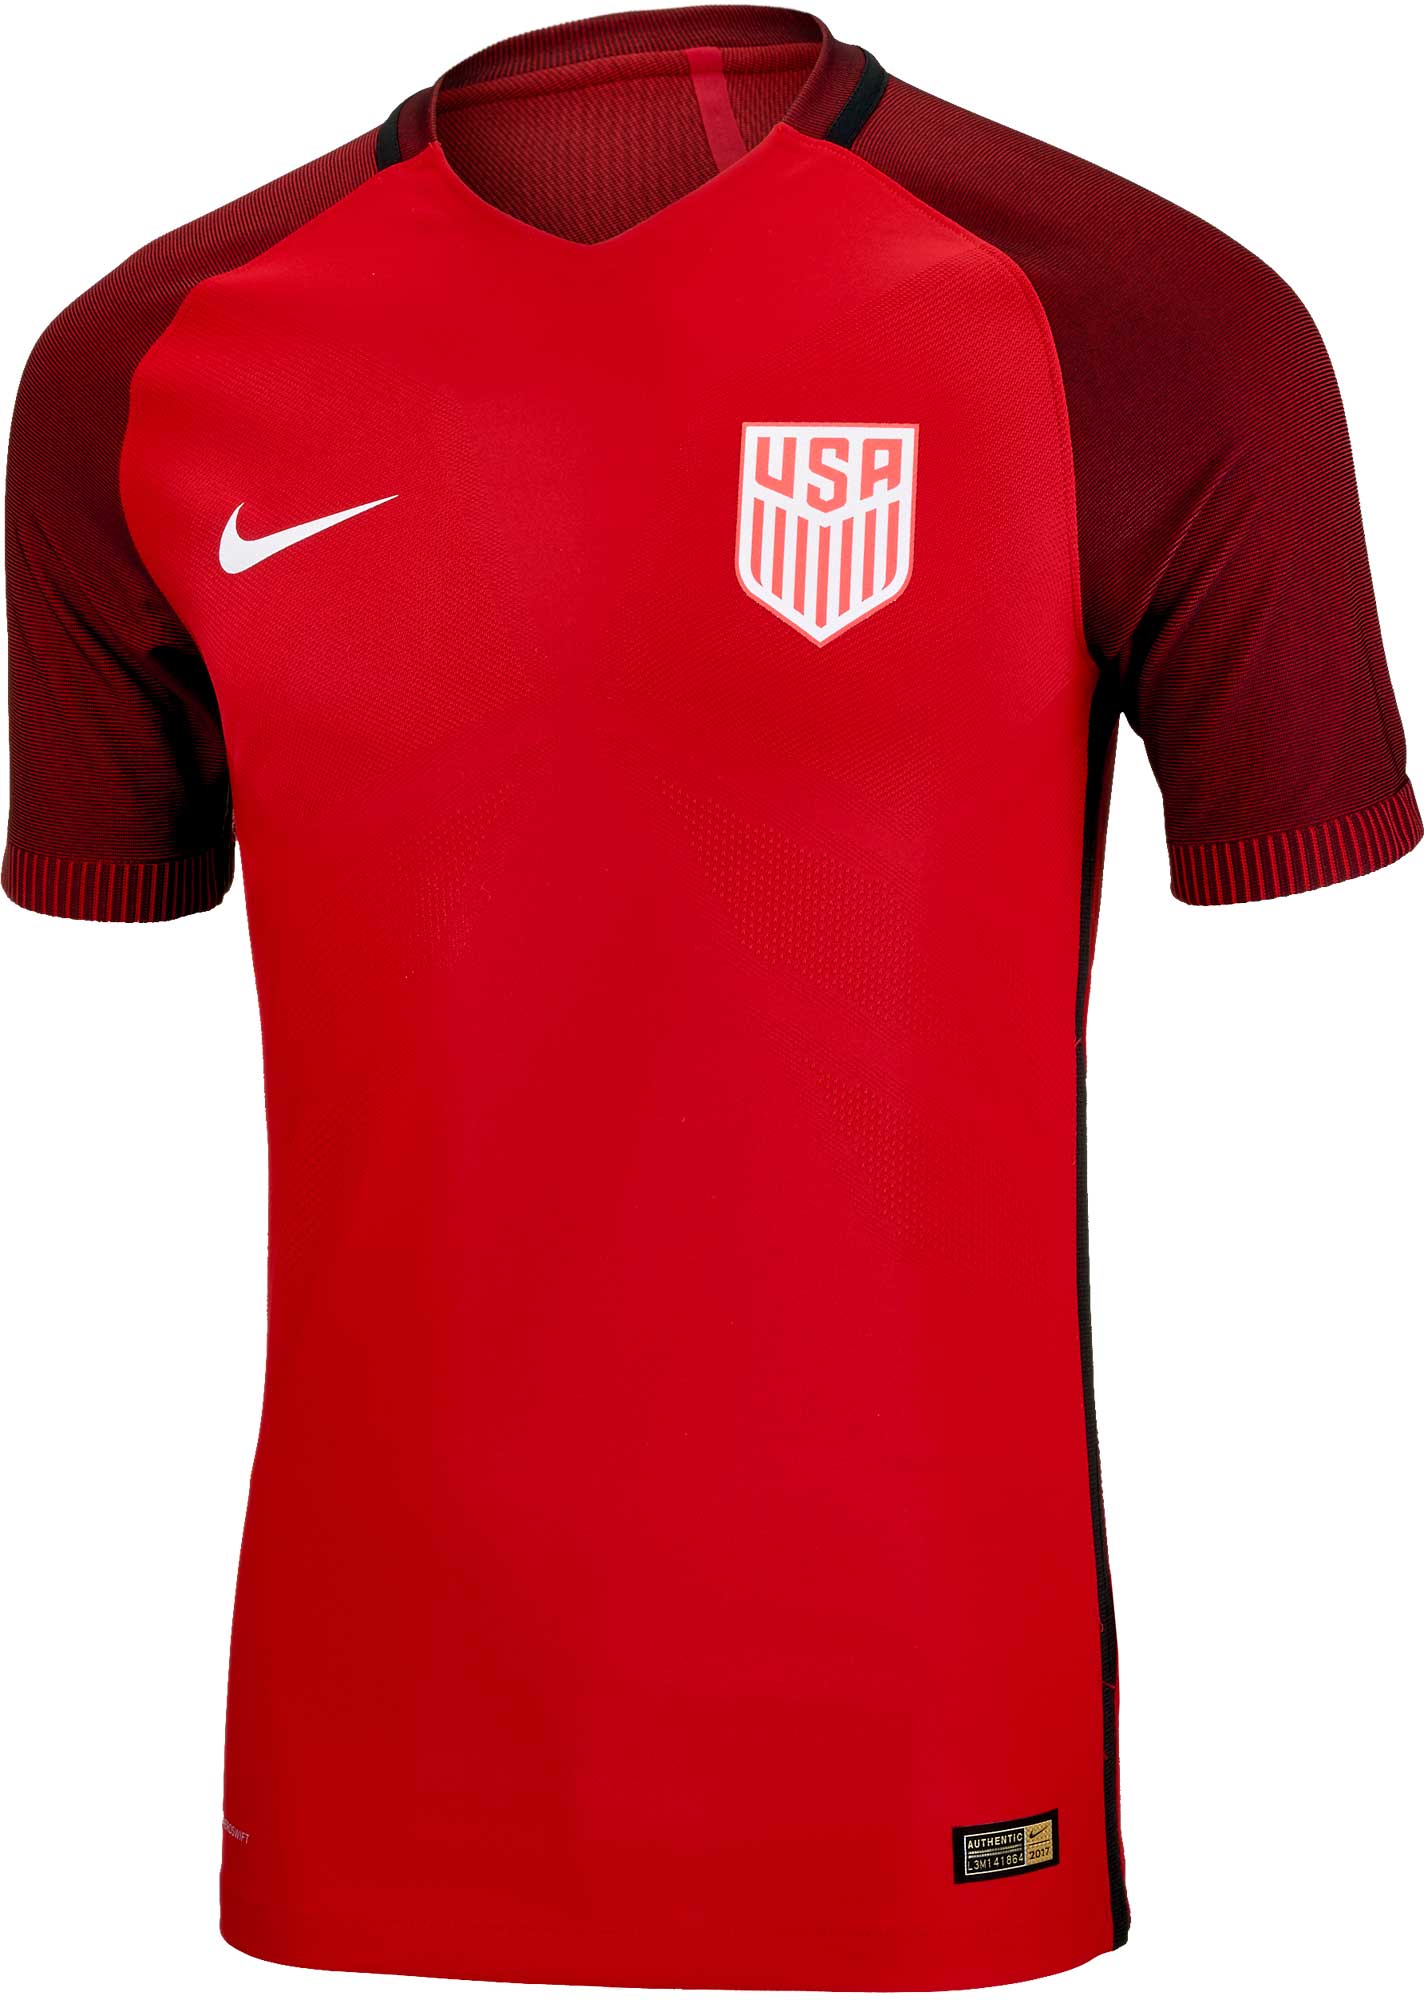 2016 usa soccer jersey